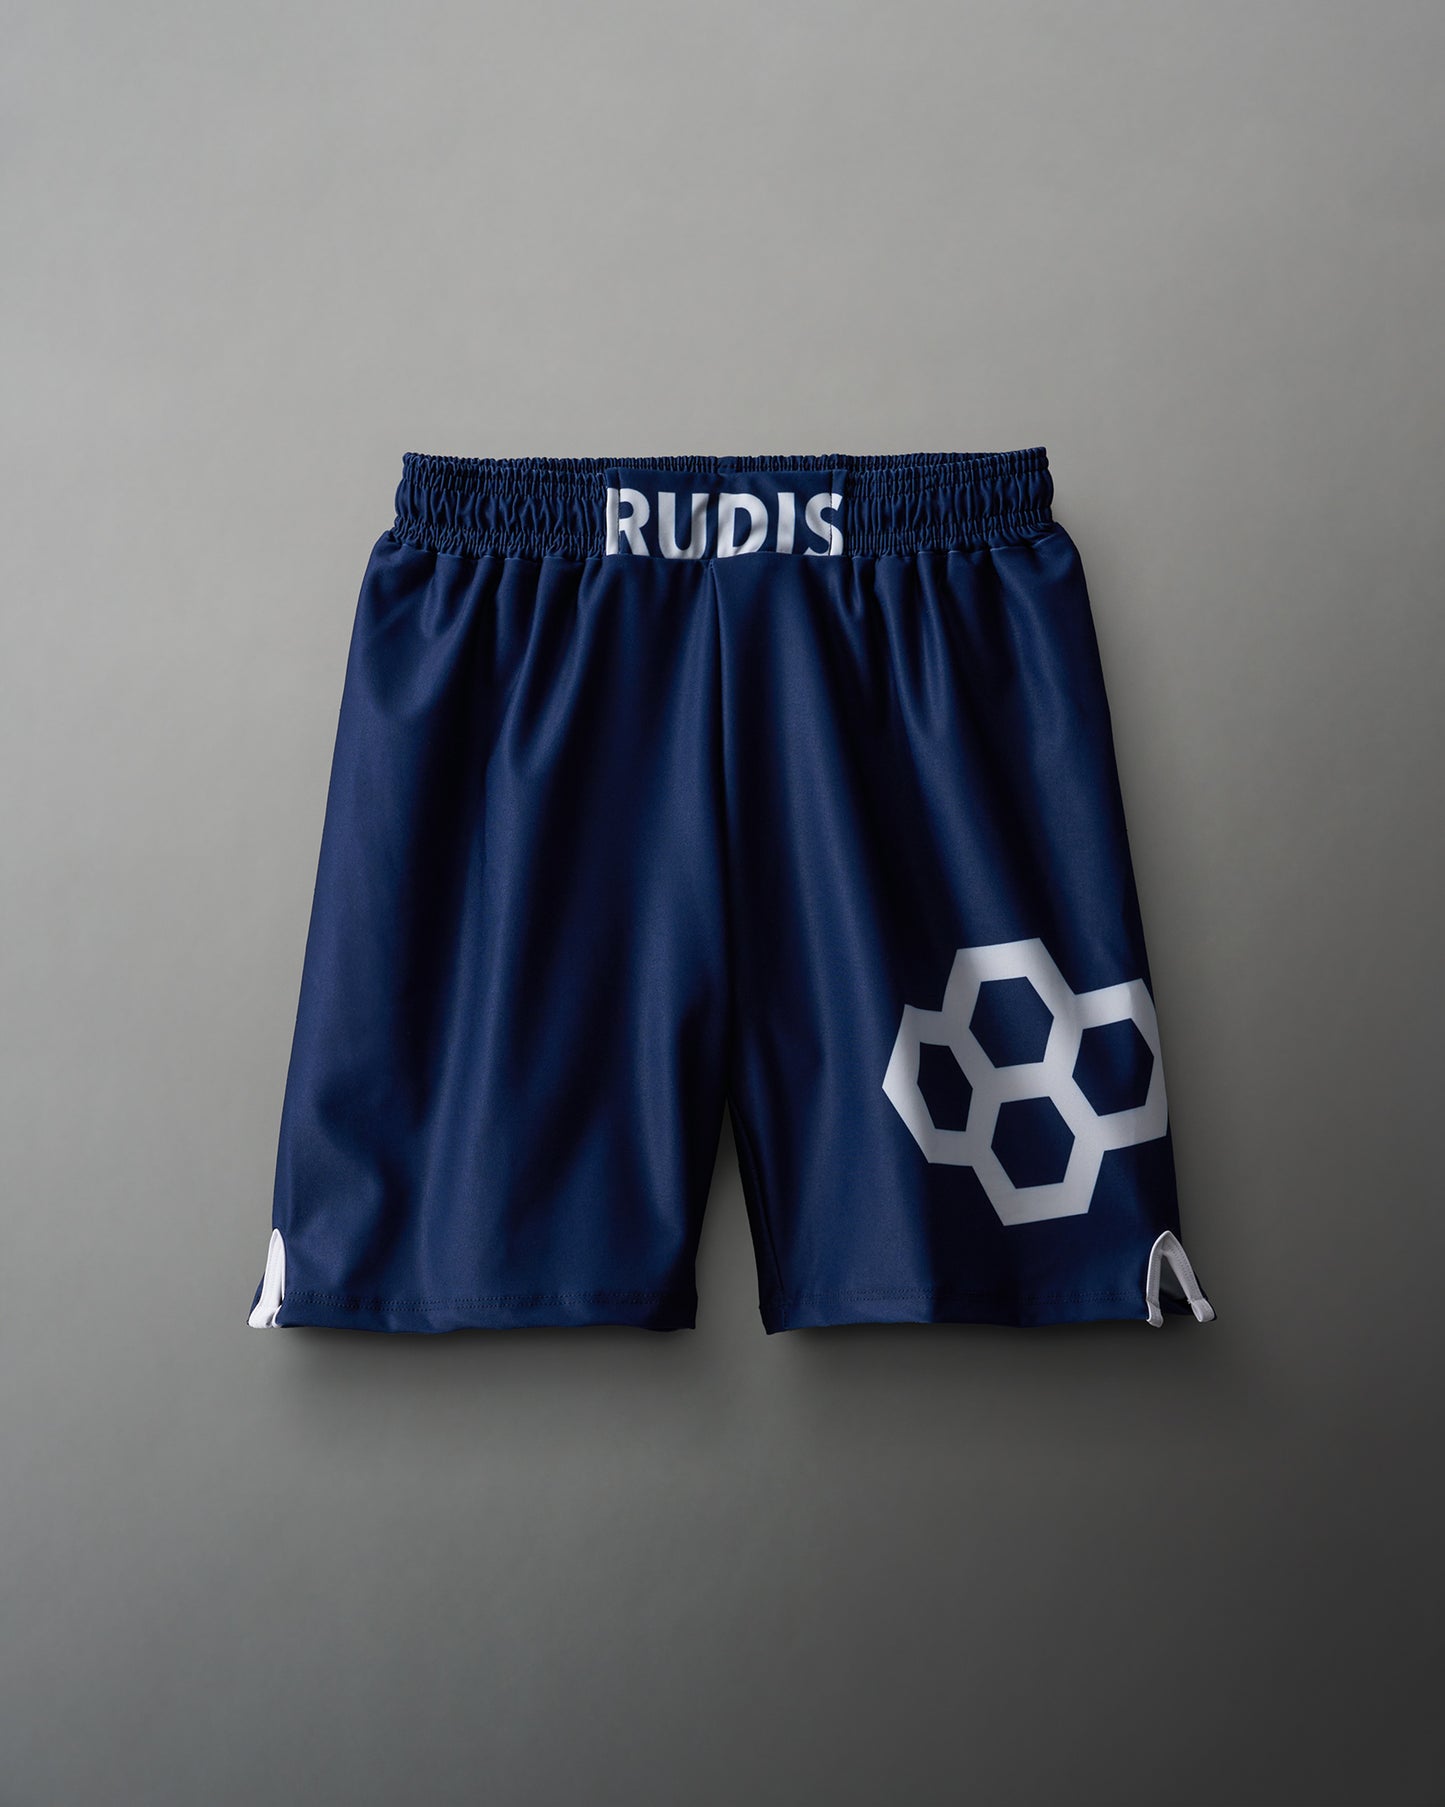 RUDIS Throwdown Elite Wrestling Shorts